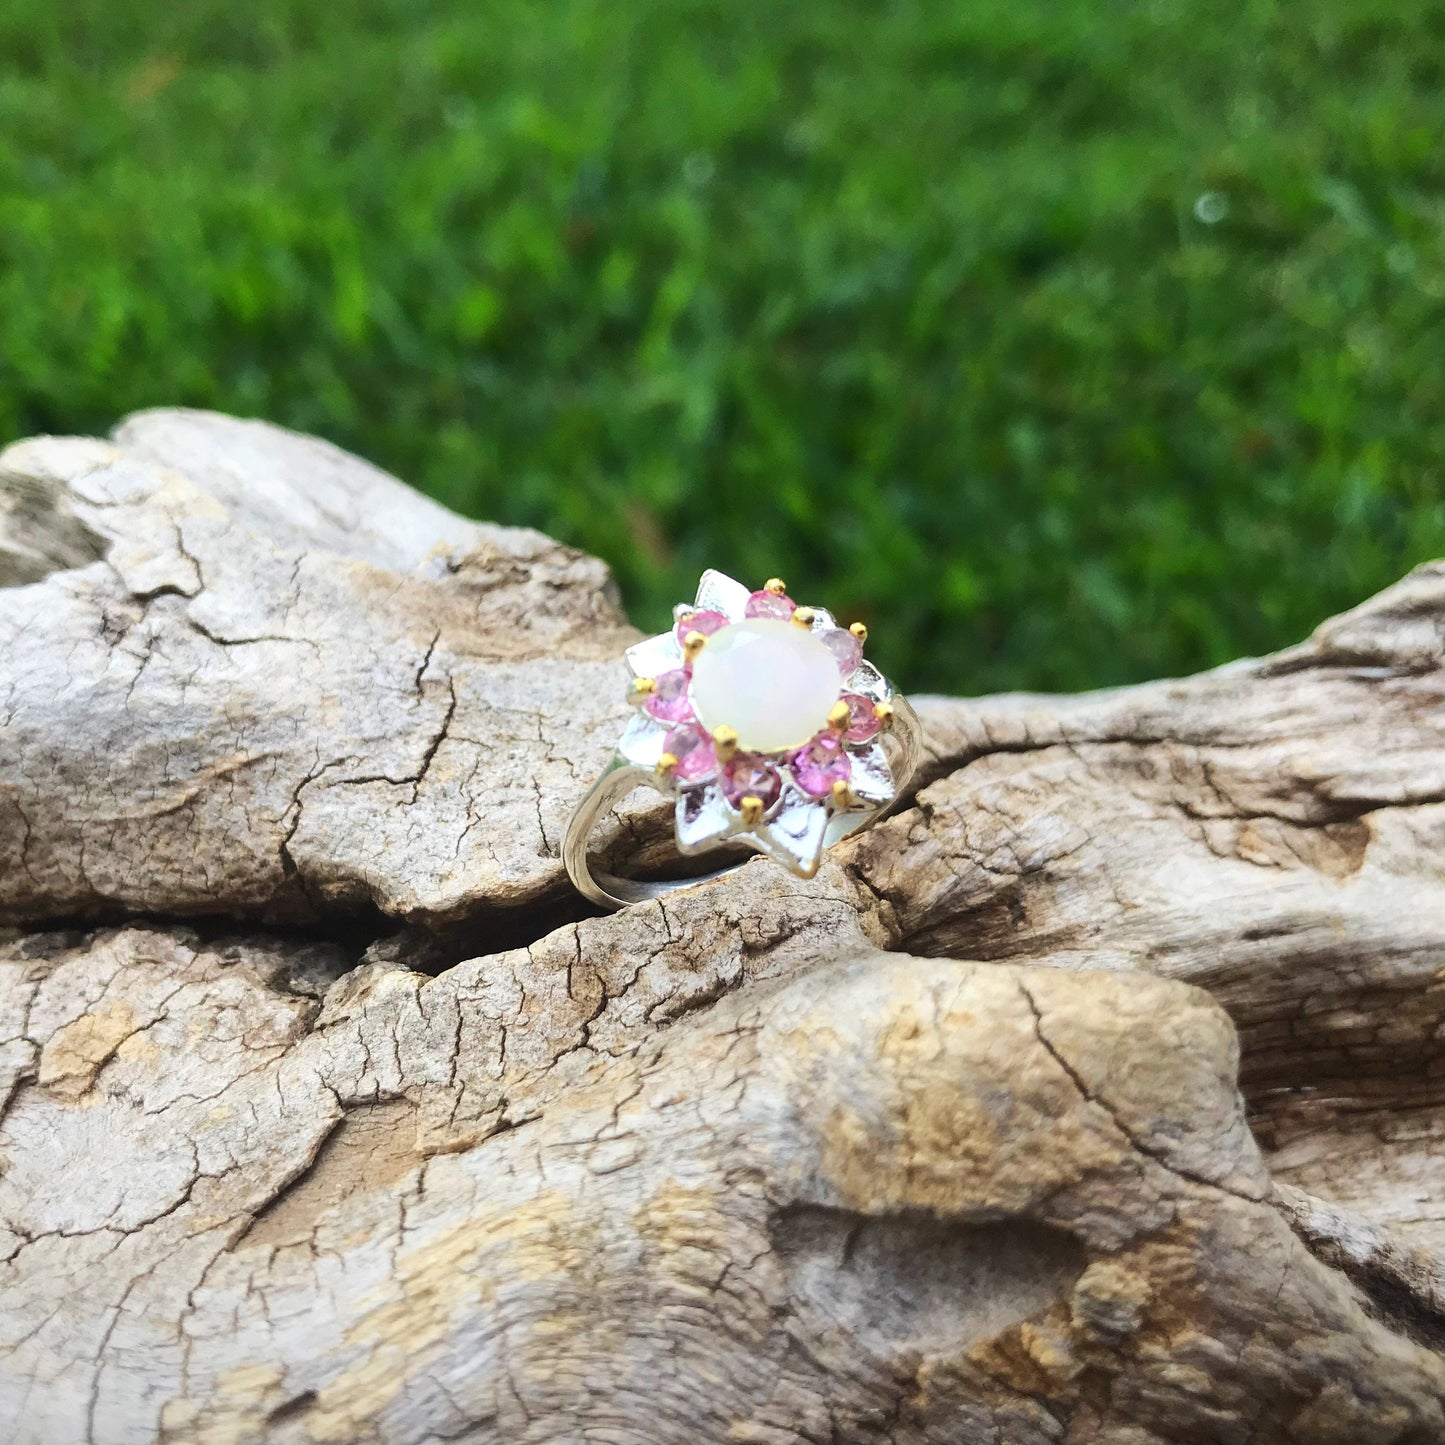 Sterling Silver Handmade Natural opal pink tourmaline flower Artisan handmade ring 8